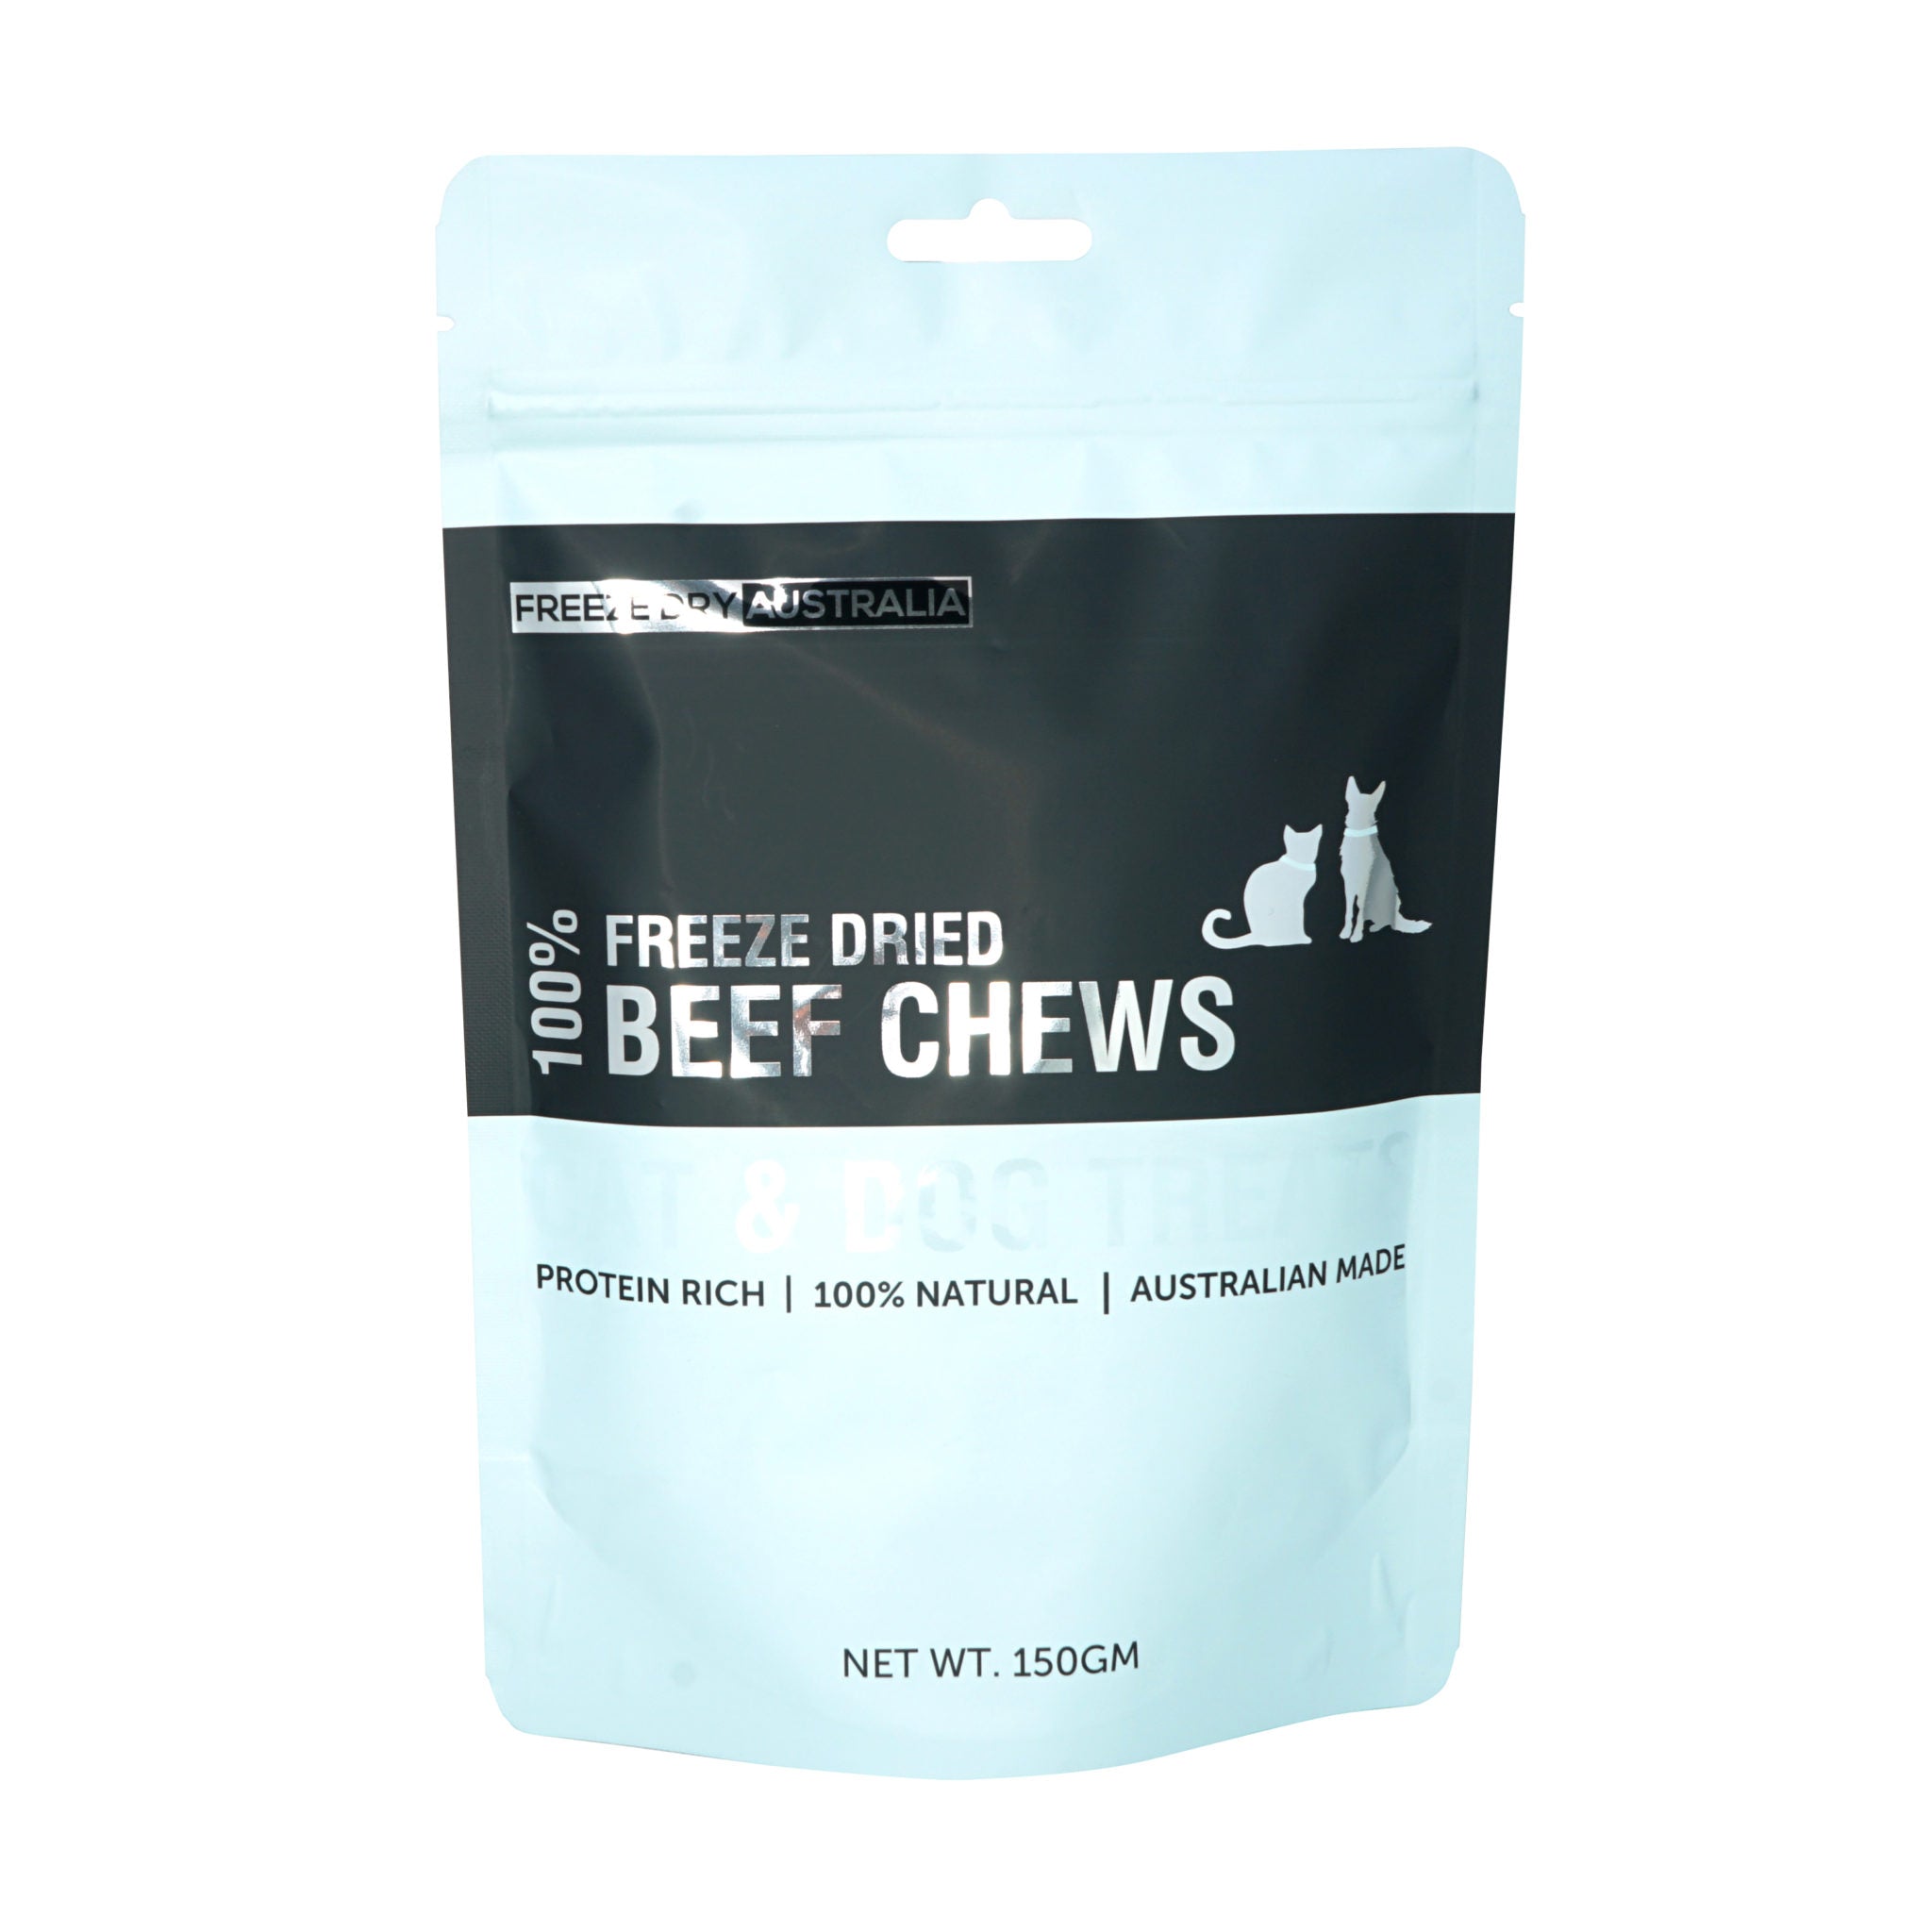 FDA Freeze Dry Australia Beef Chews 150g